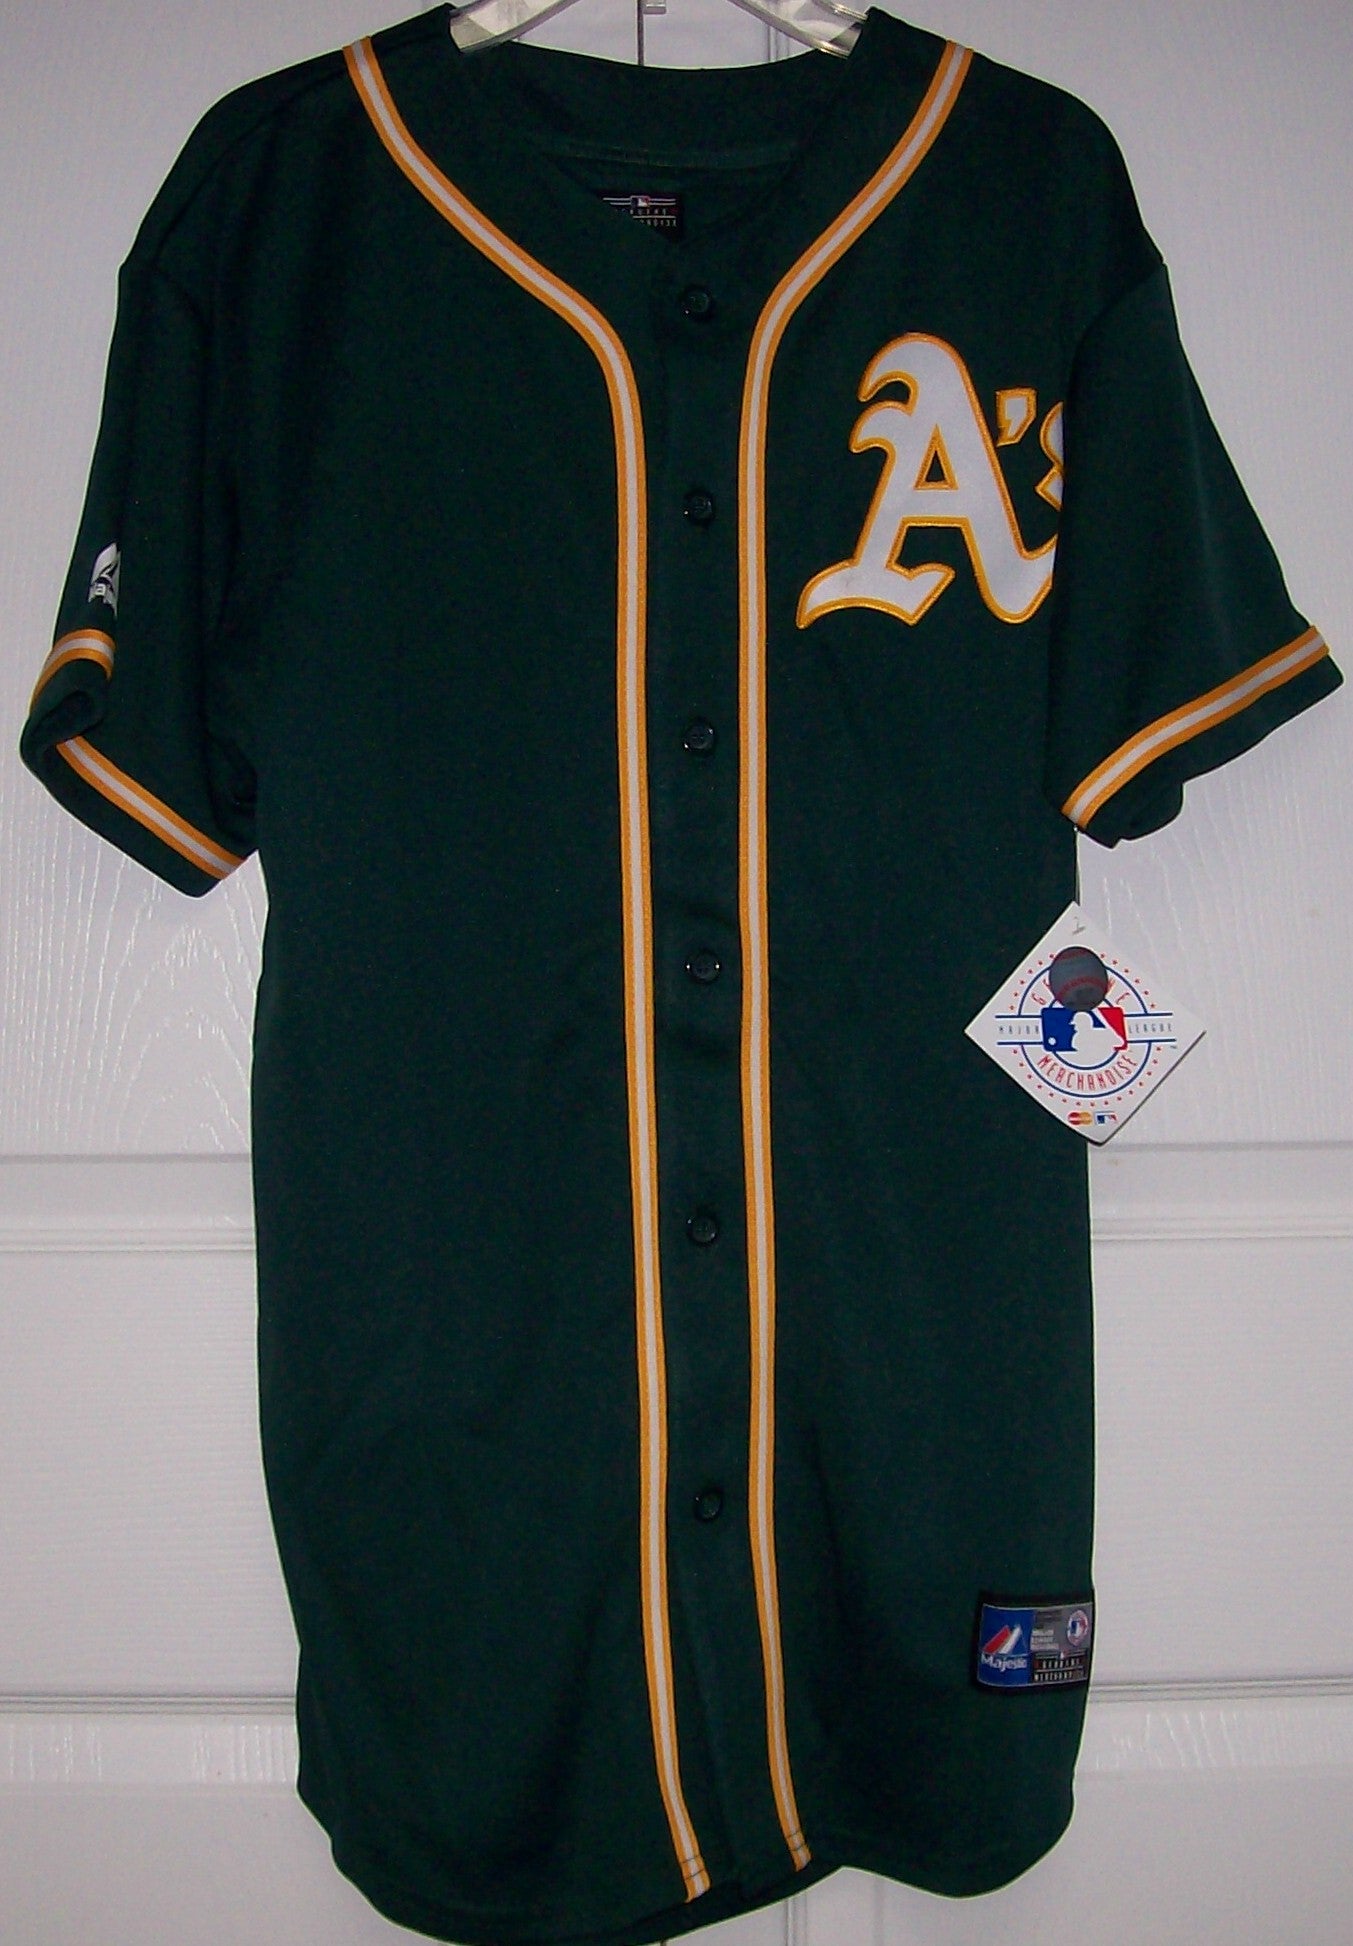 Oakland Athletics Alternate Uniform